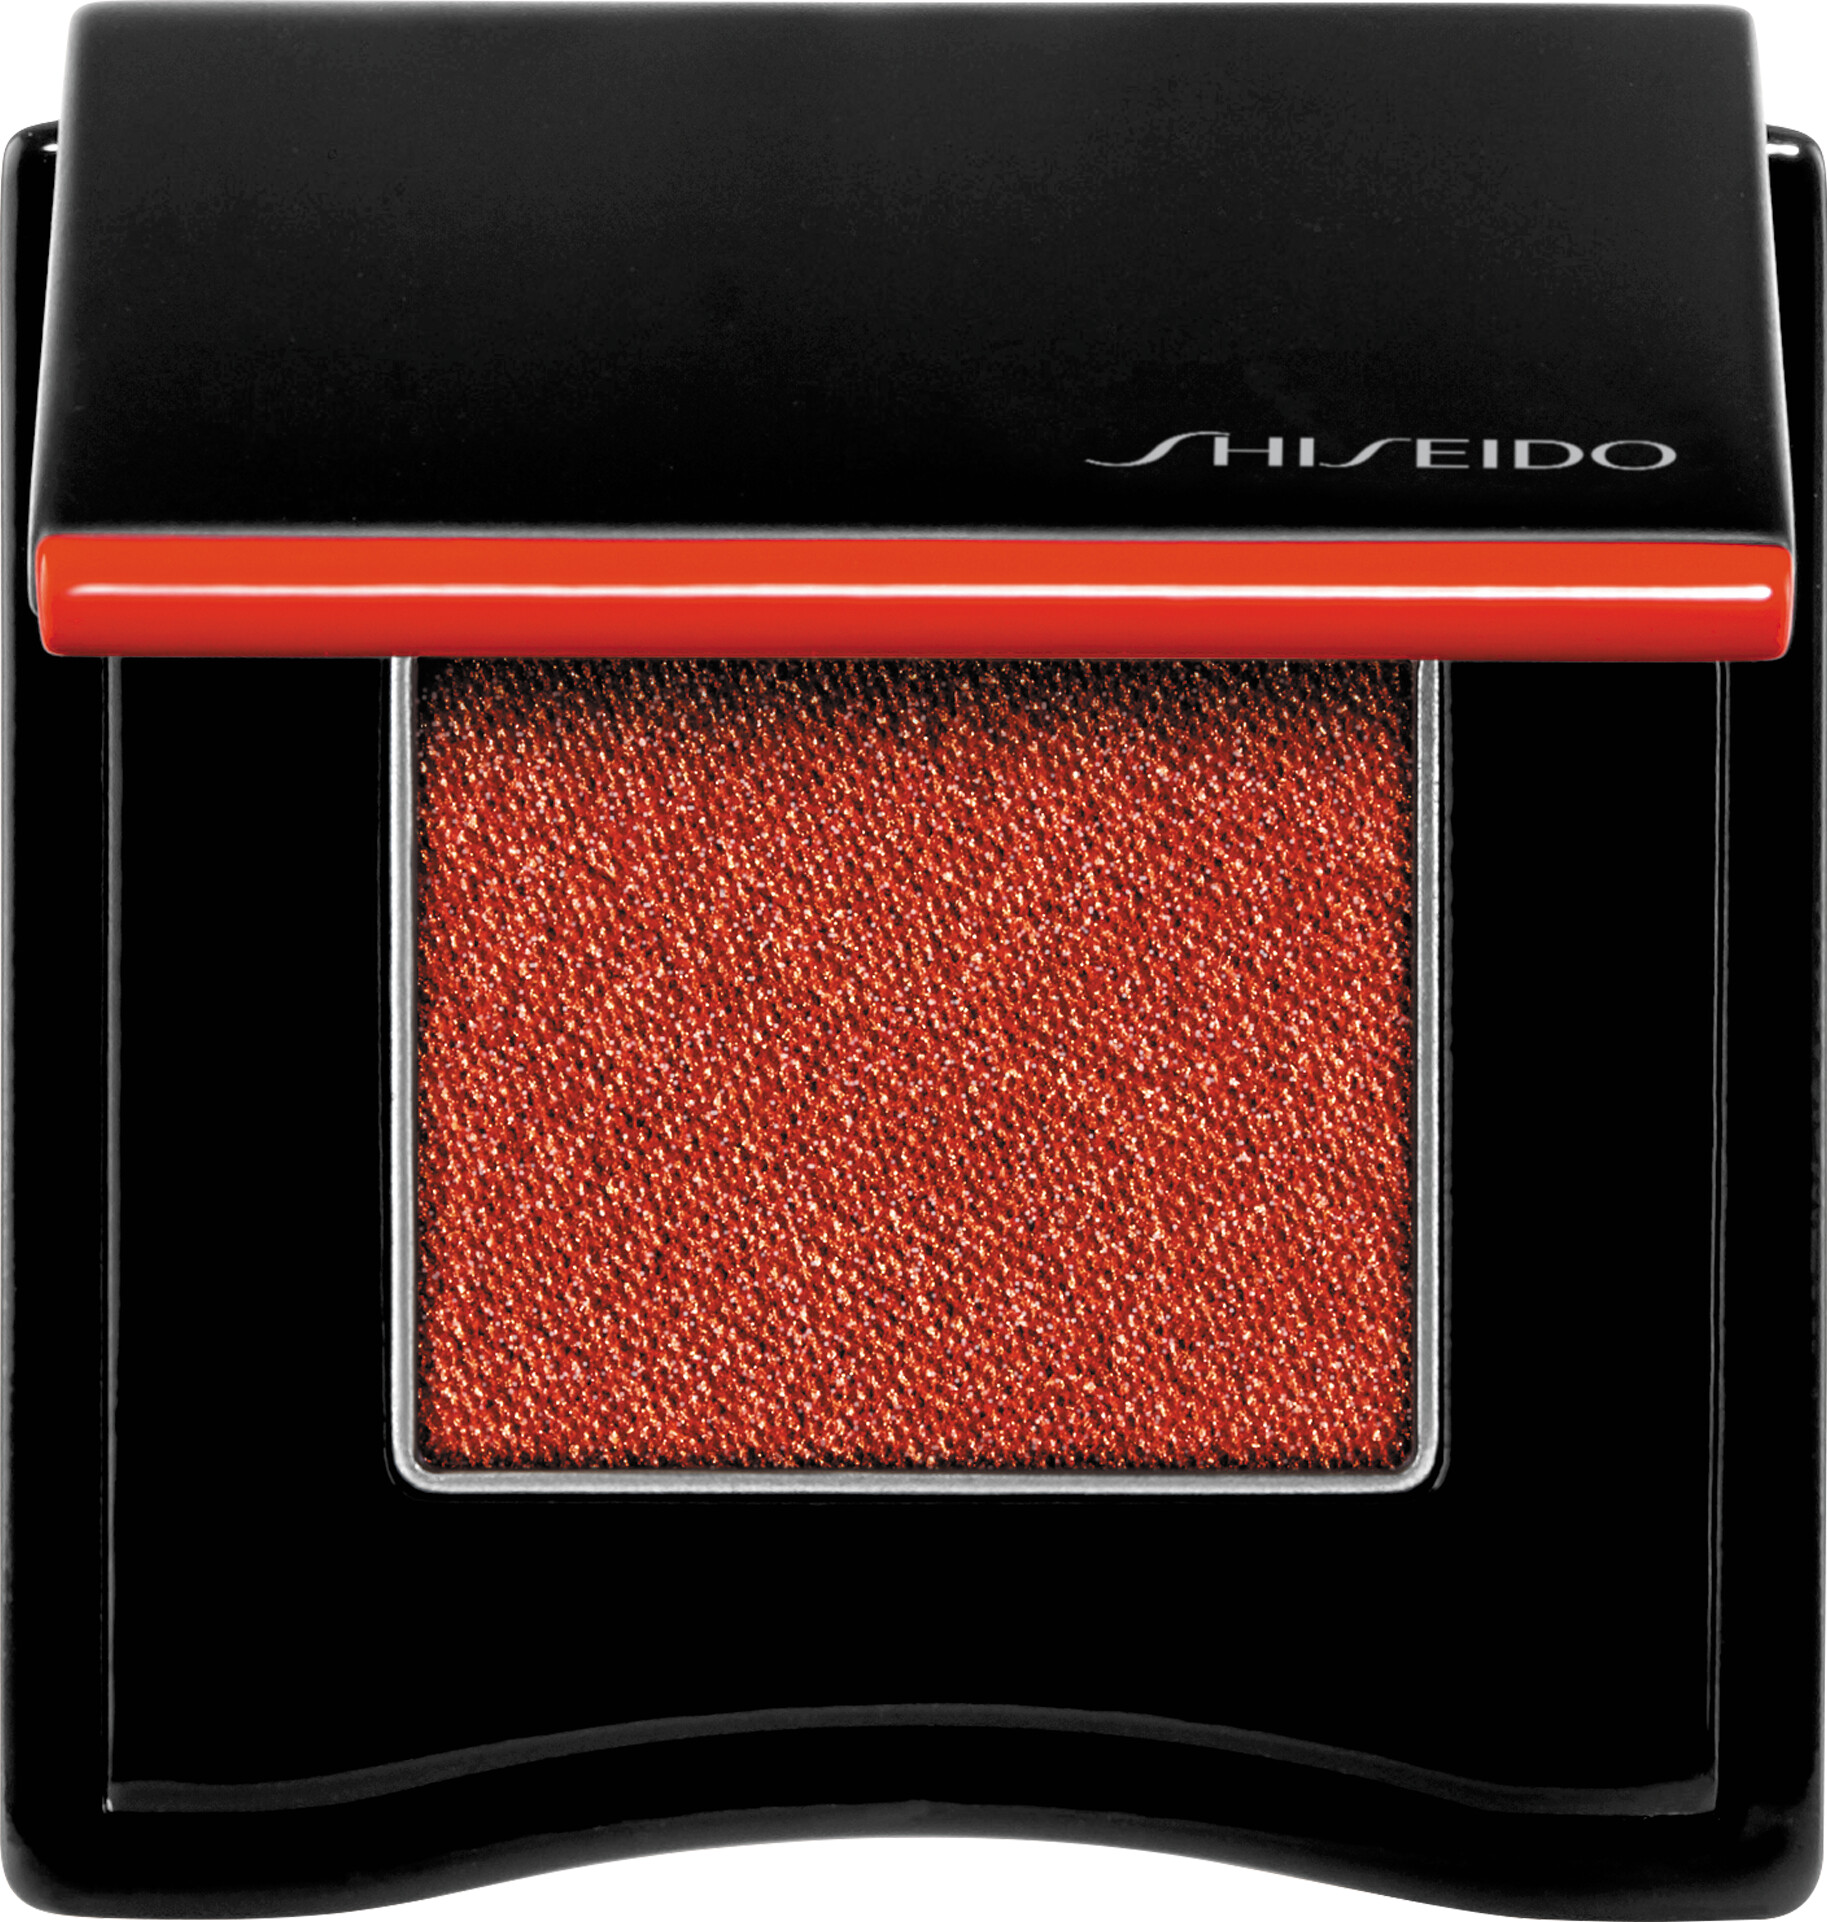 Shiseido POP PowderGel Eye Shadow 2.2g 06 Vivivi Orange